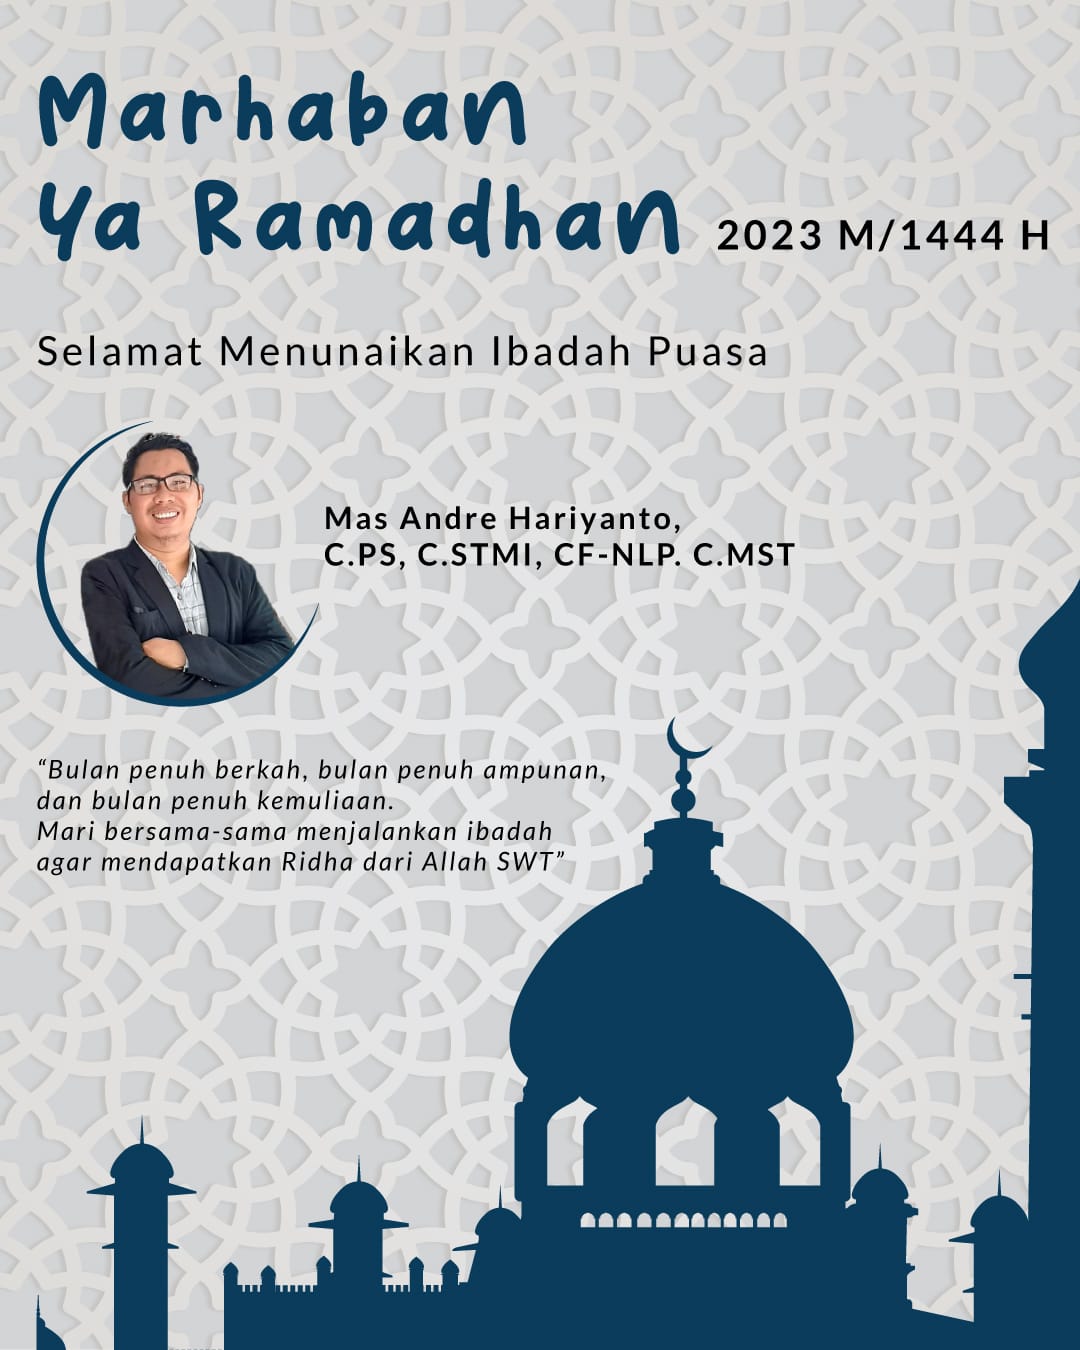 Marhaban Ya Ramadhan 1444 H. Foto: Founder & Pimred Suara Utama Mas Andre Hariyanto